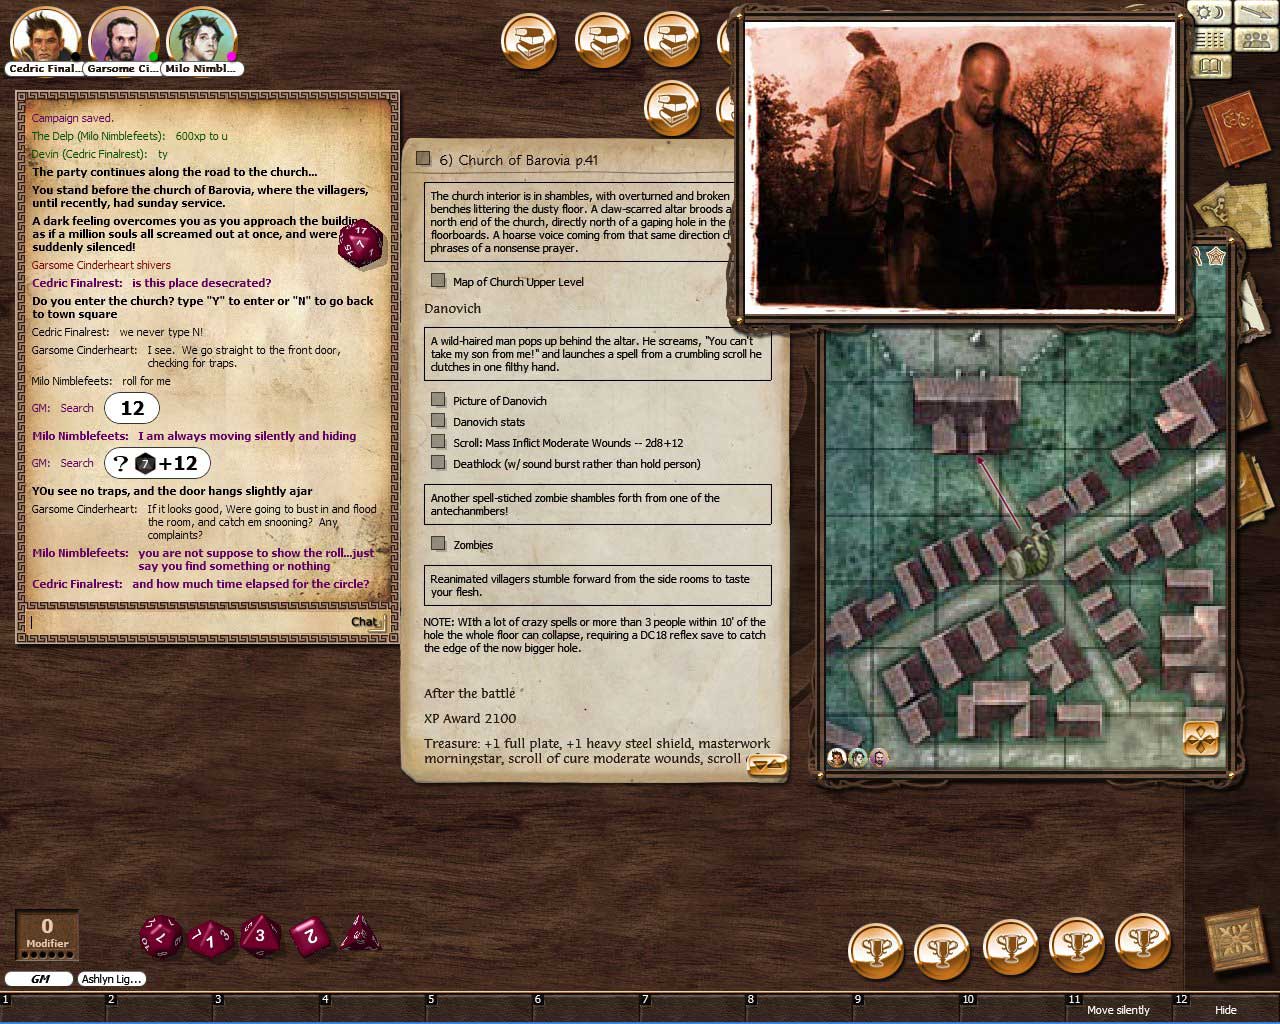 http://www.fantasygrounds.com/images/screenshots/fg2-screenshot-01.jpg